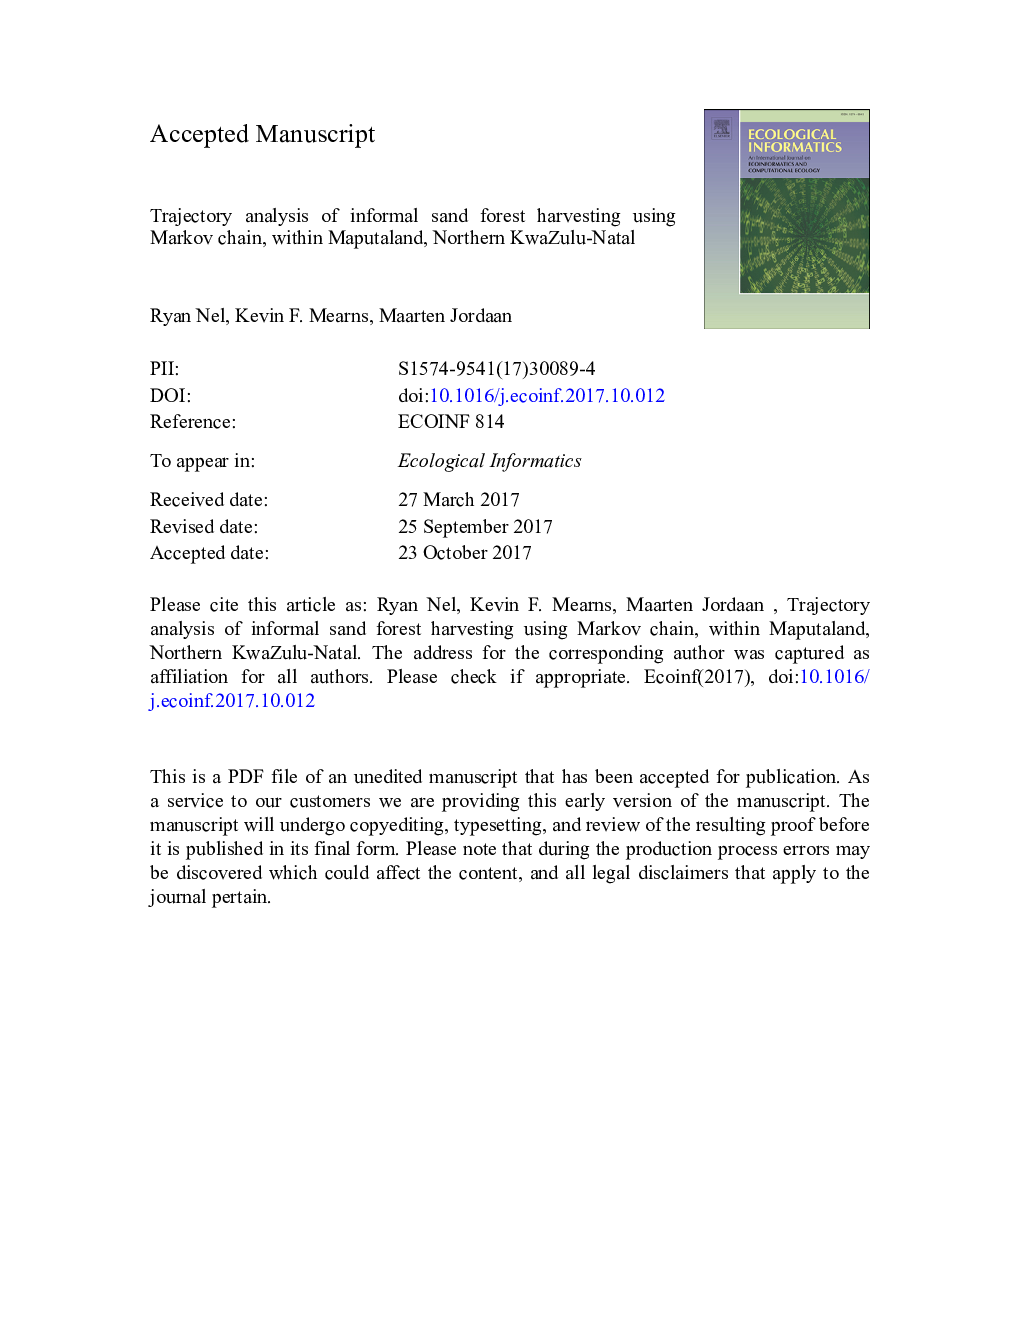 Trajectory analysis of informal Sand Forest harvesting using Markov chain, within Maputaland, Northern KwaZulu-Natal